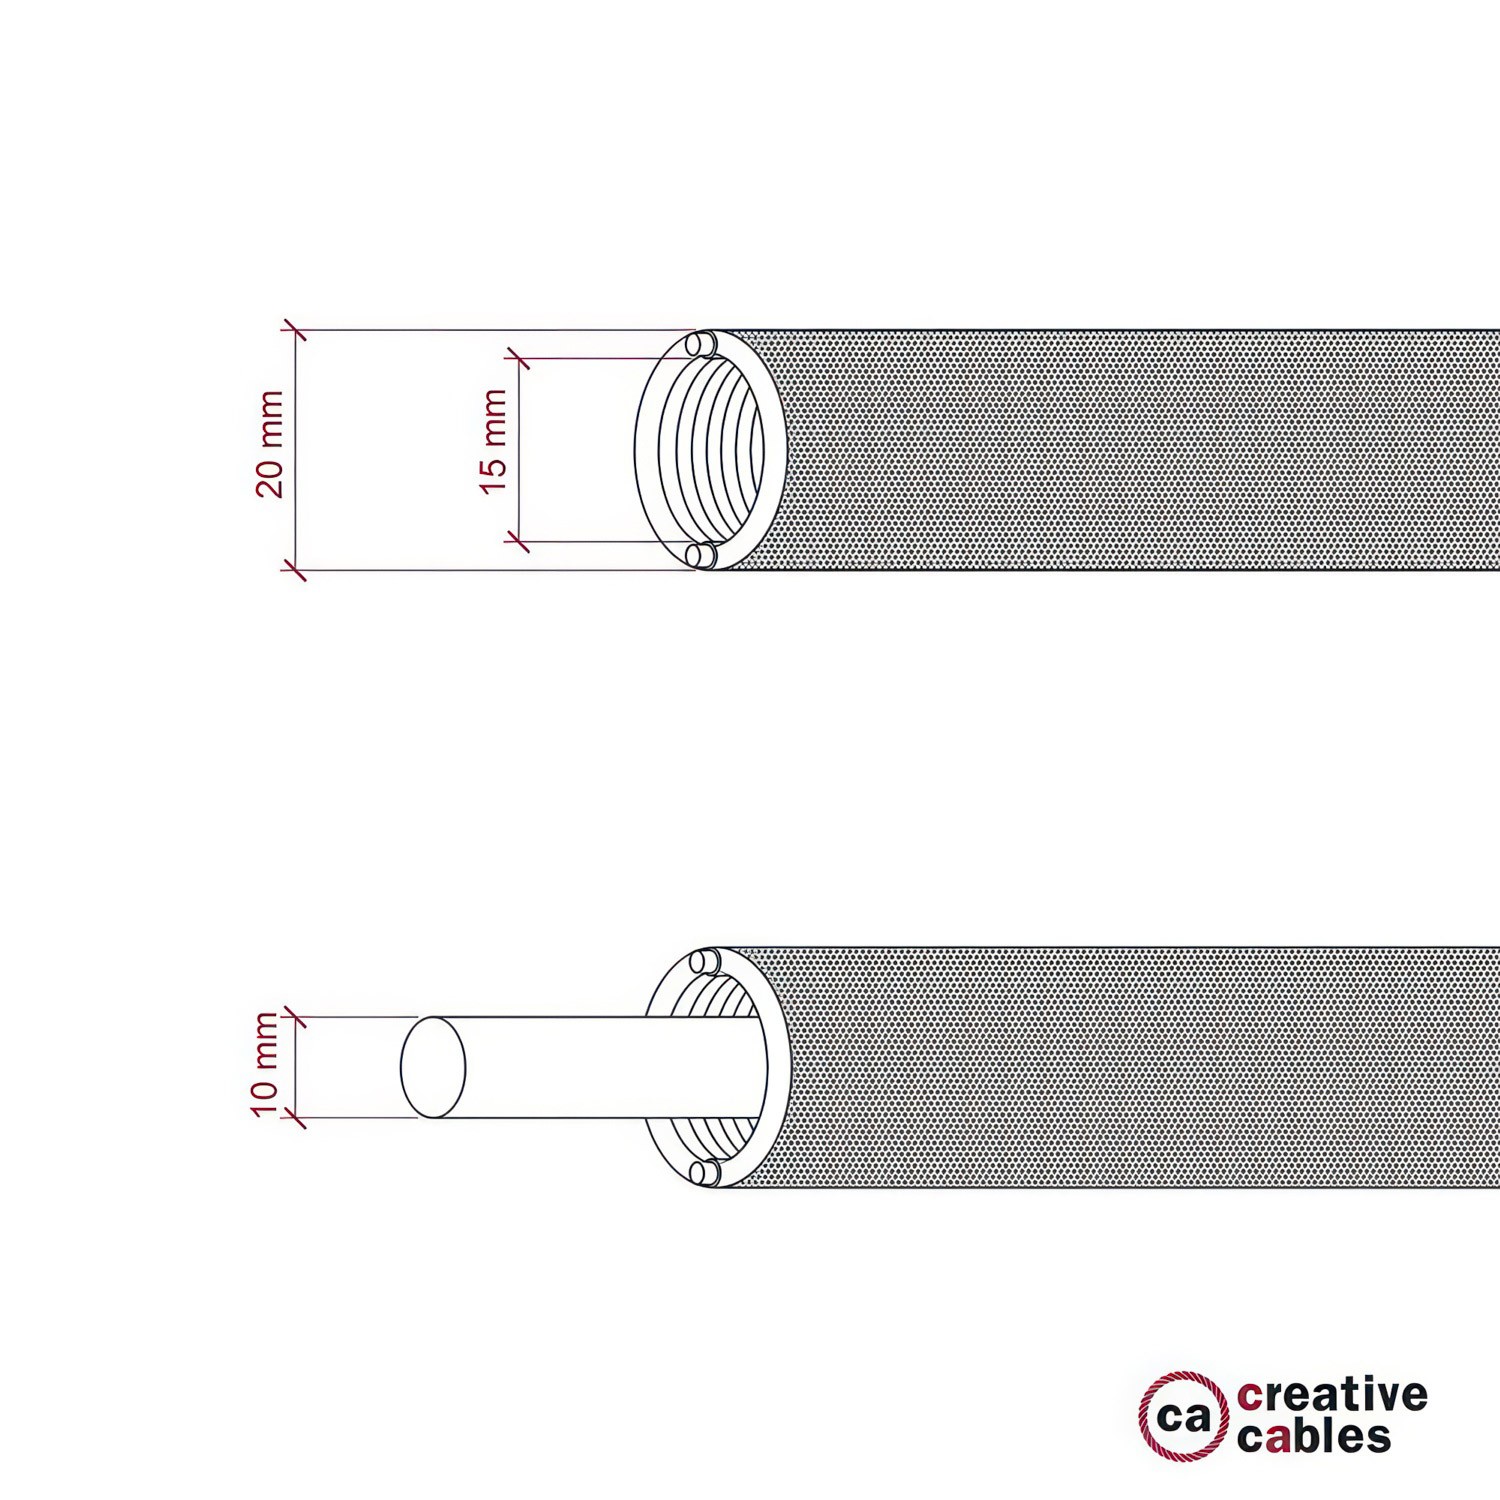 Design flexibele elektrabuis met stof omweven - Creative-Tube Cipria viscose RM27 20 mm.